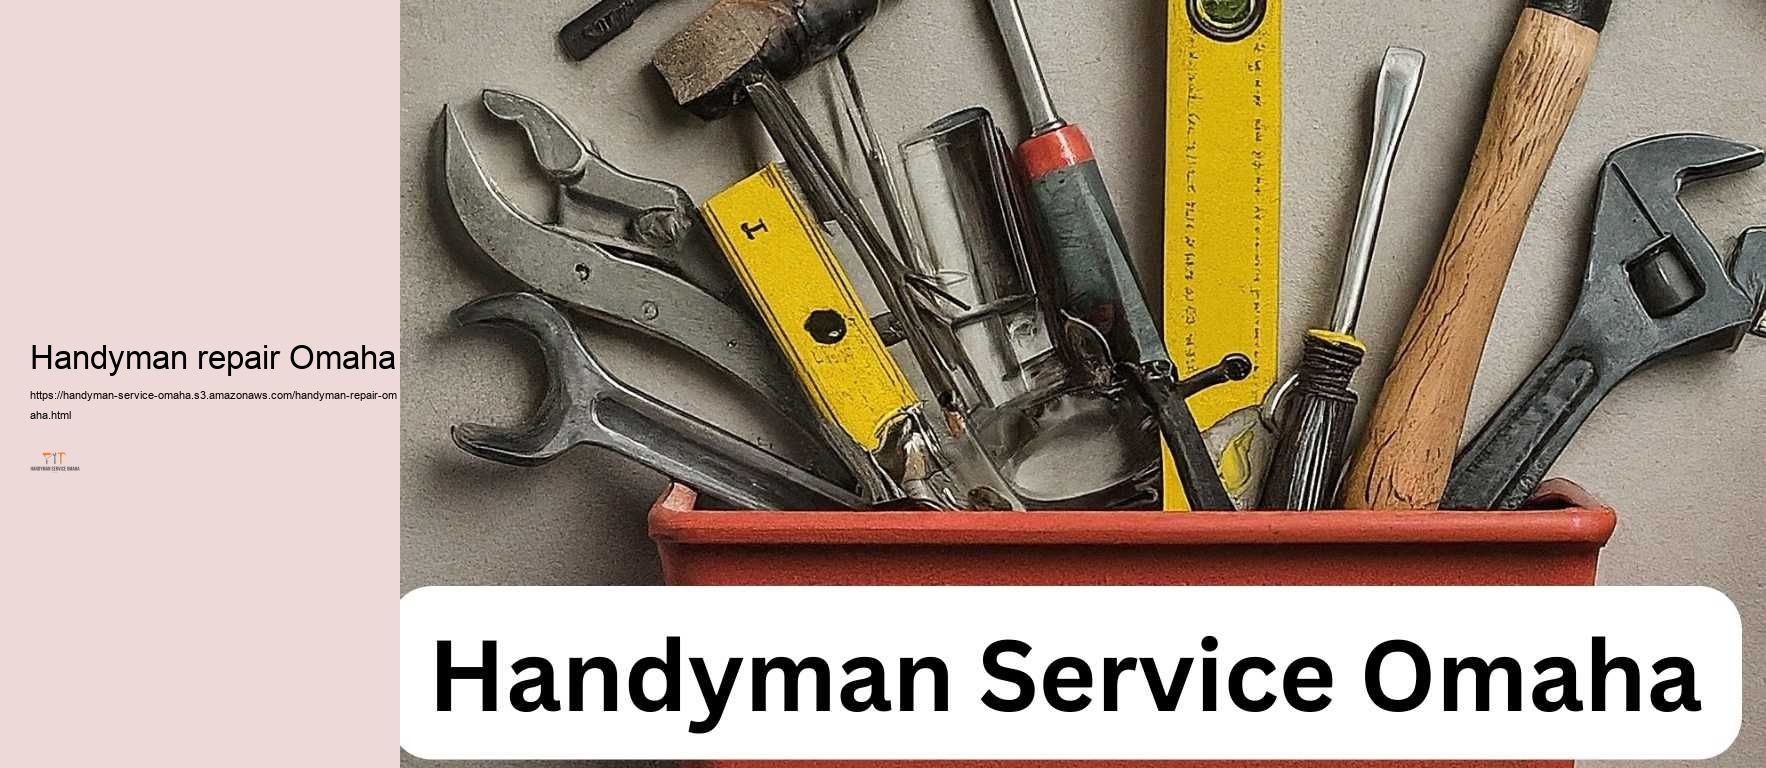 Handyman repair Omaha